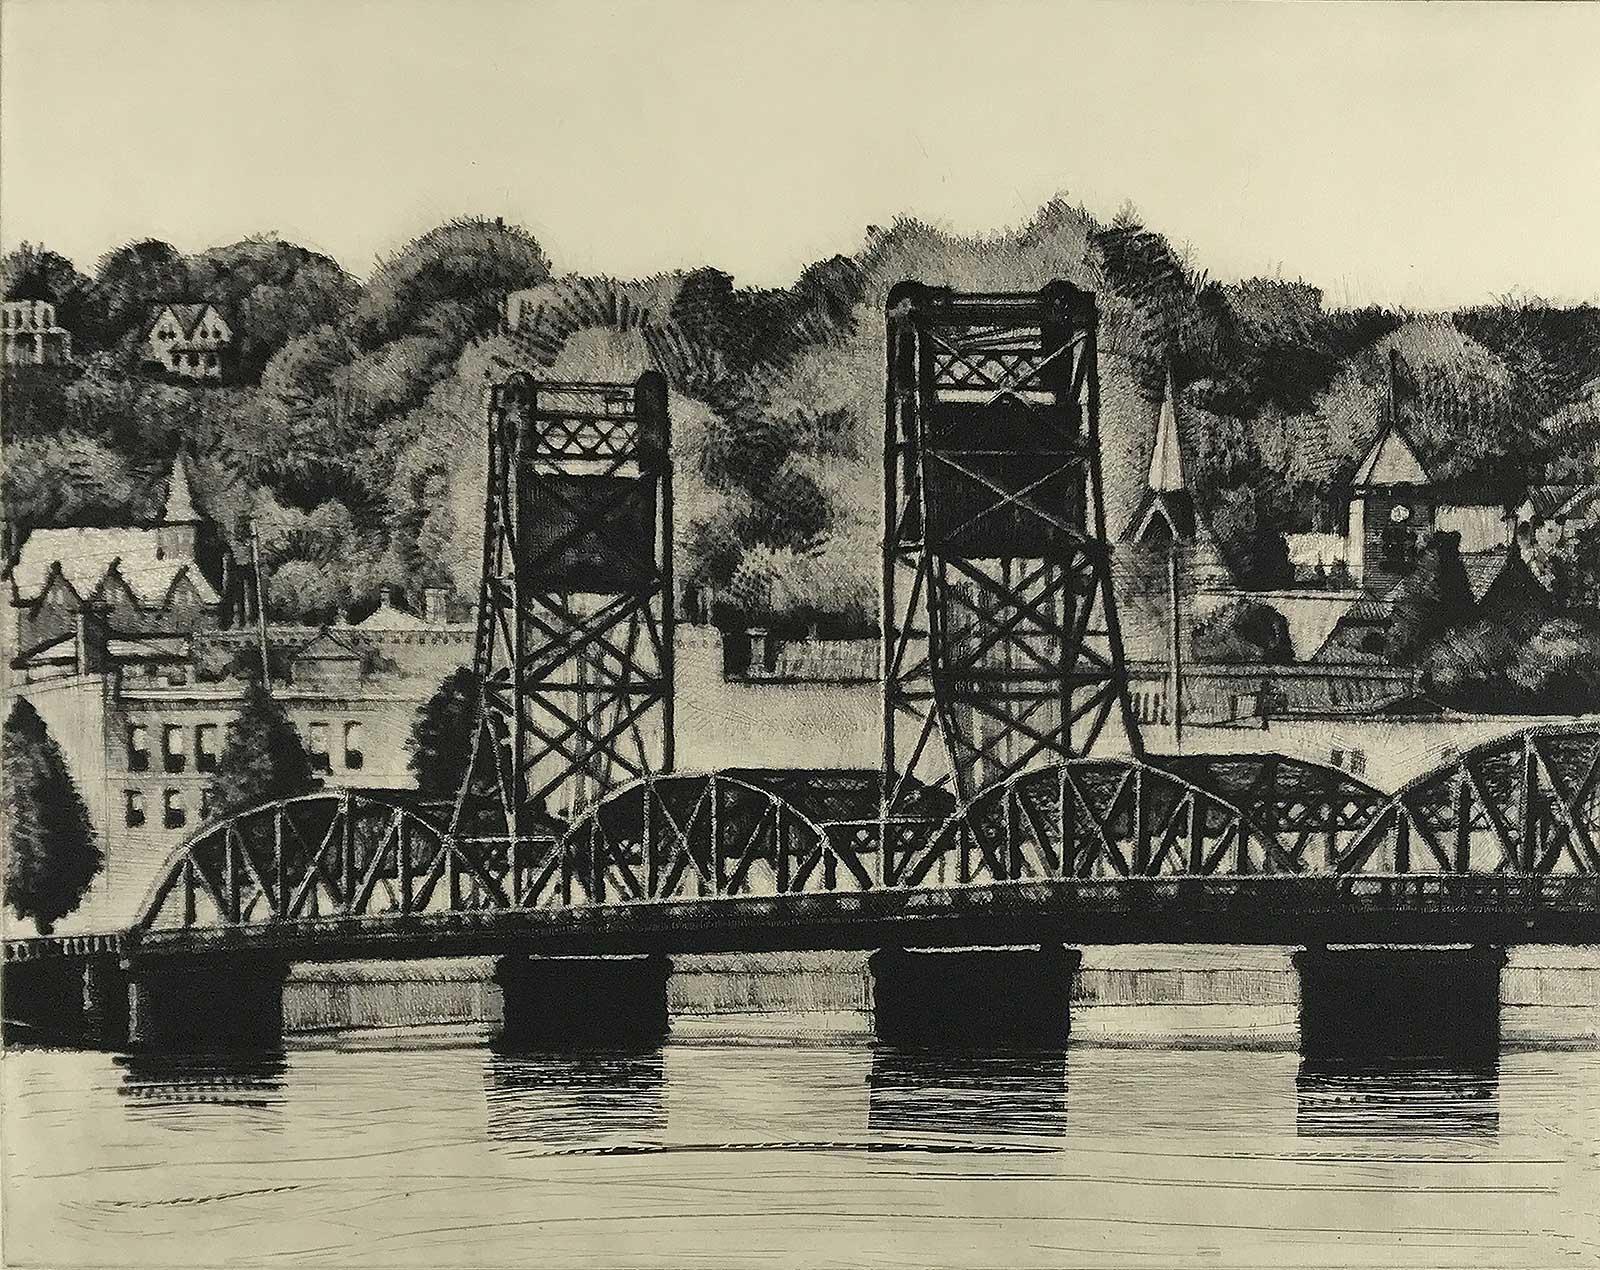 Larry Welo Still-Life Print - Still Waters (A bridge over still waters in upper Midwest)